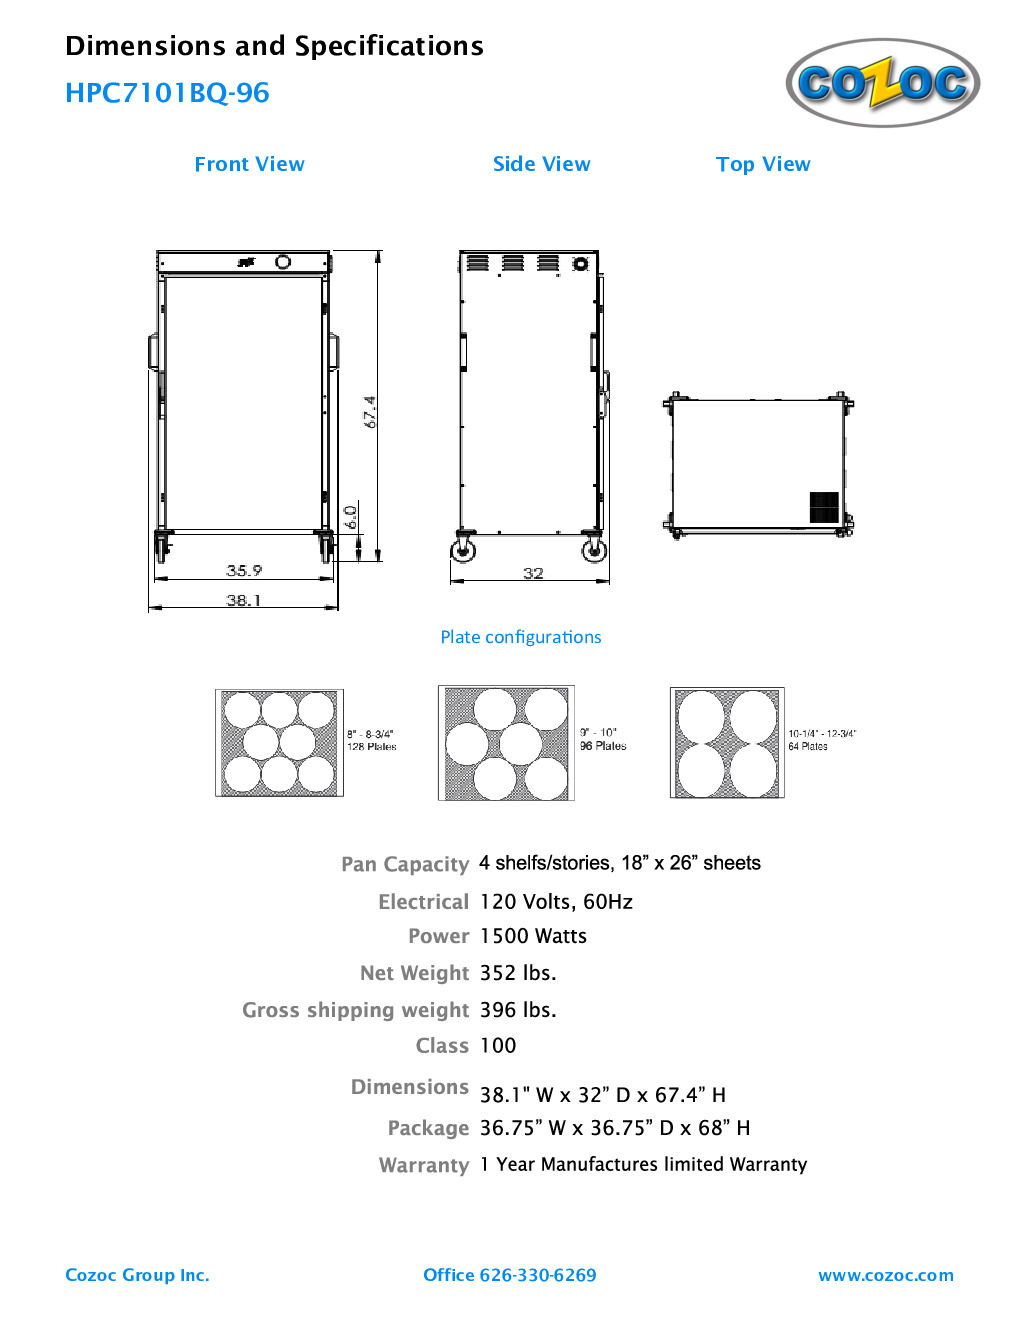 Cozoc HPC7101BQ-96 Half-Height Heated Holding Proofing Cabinet